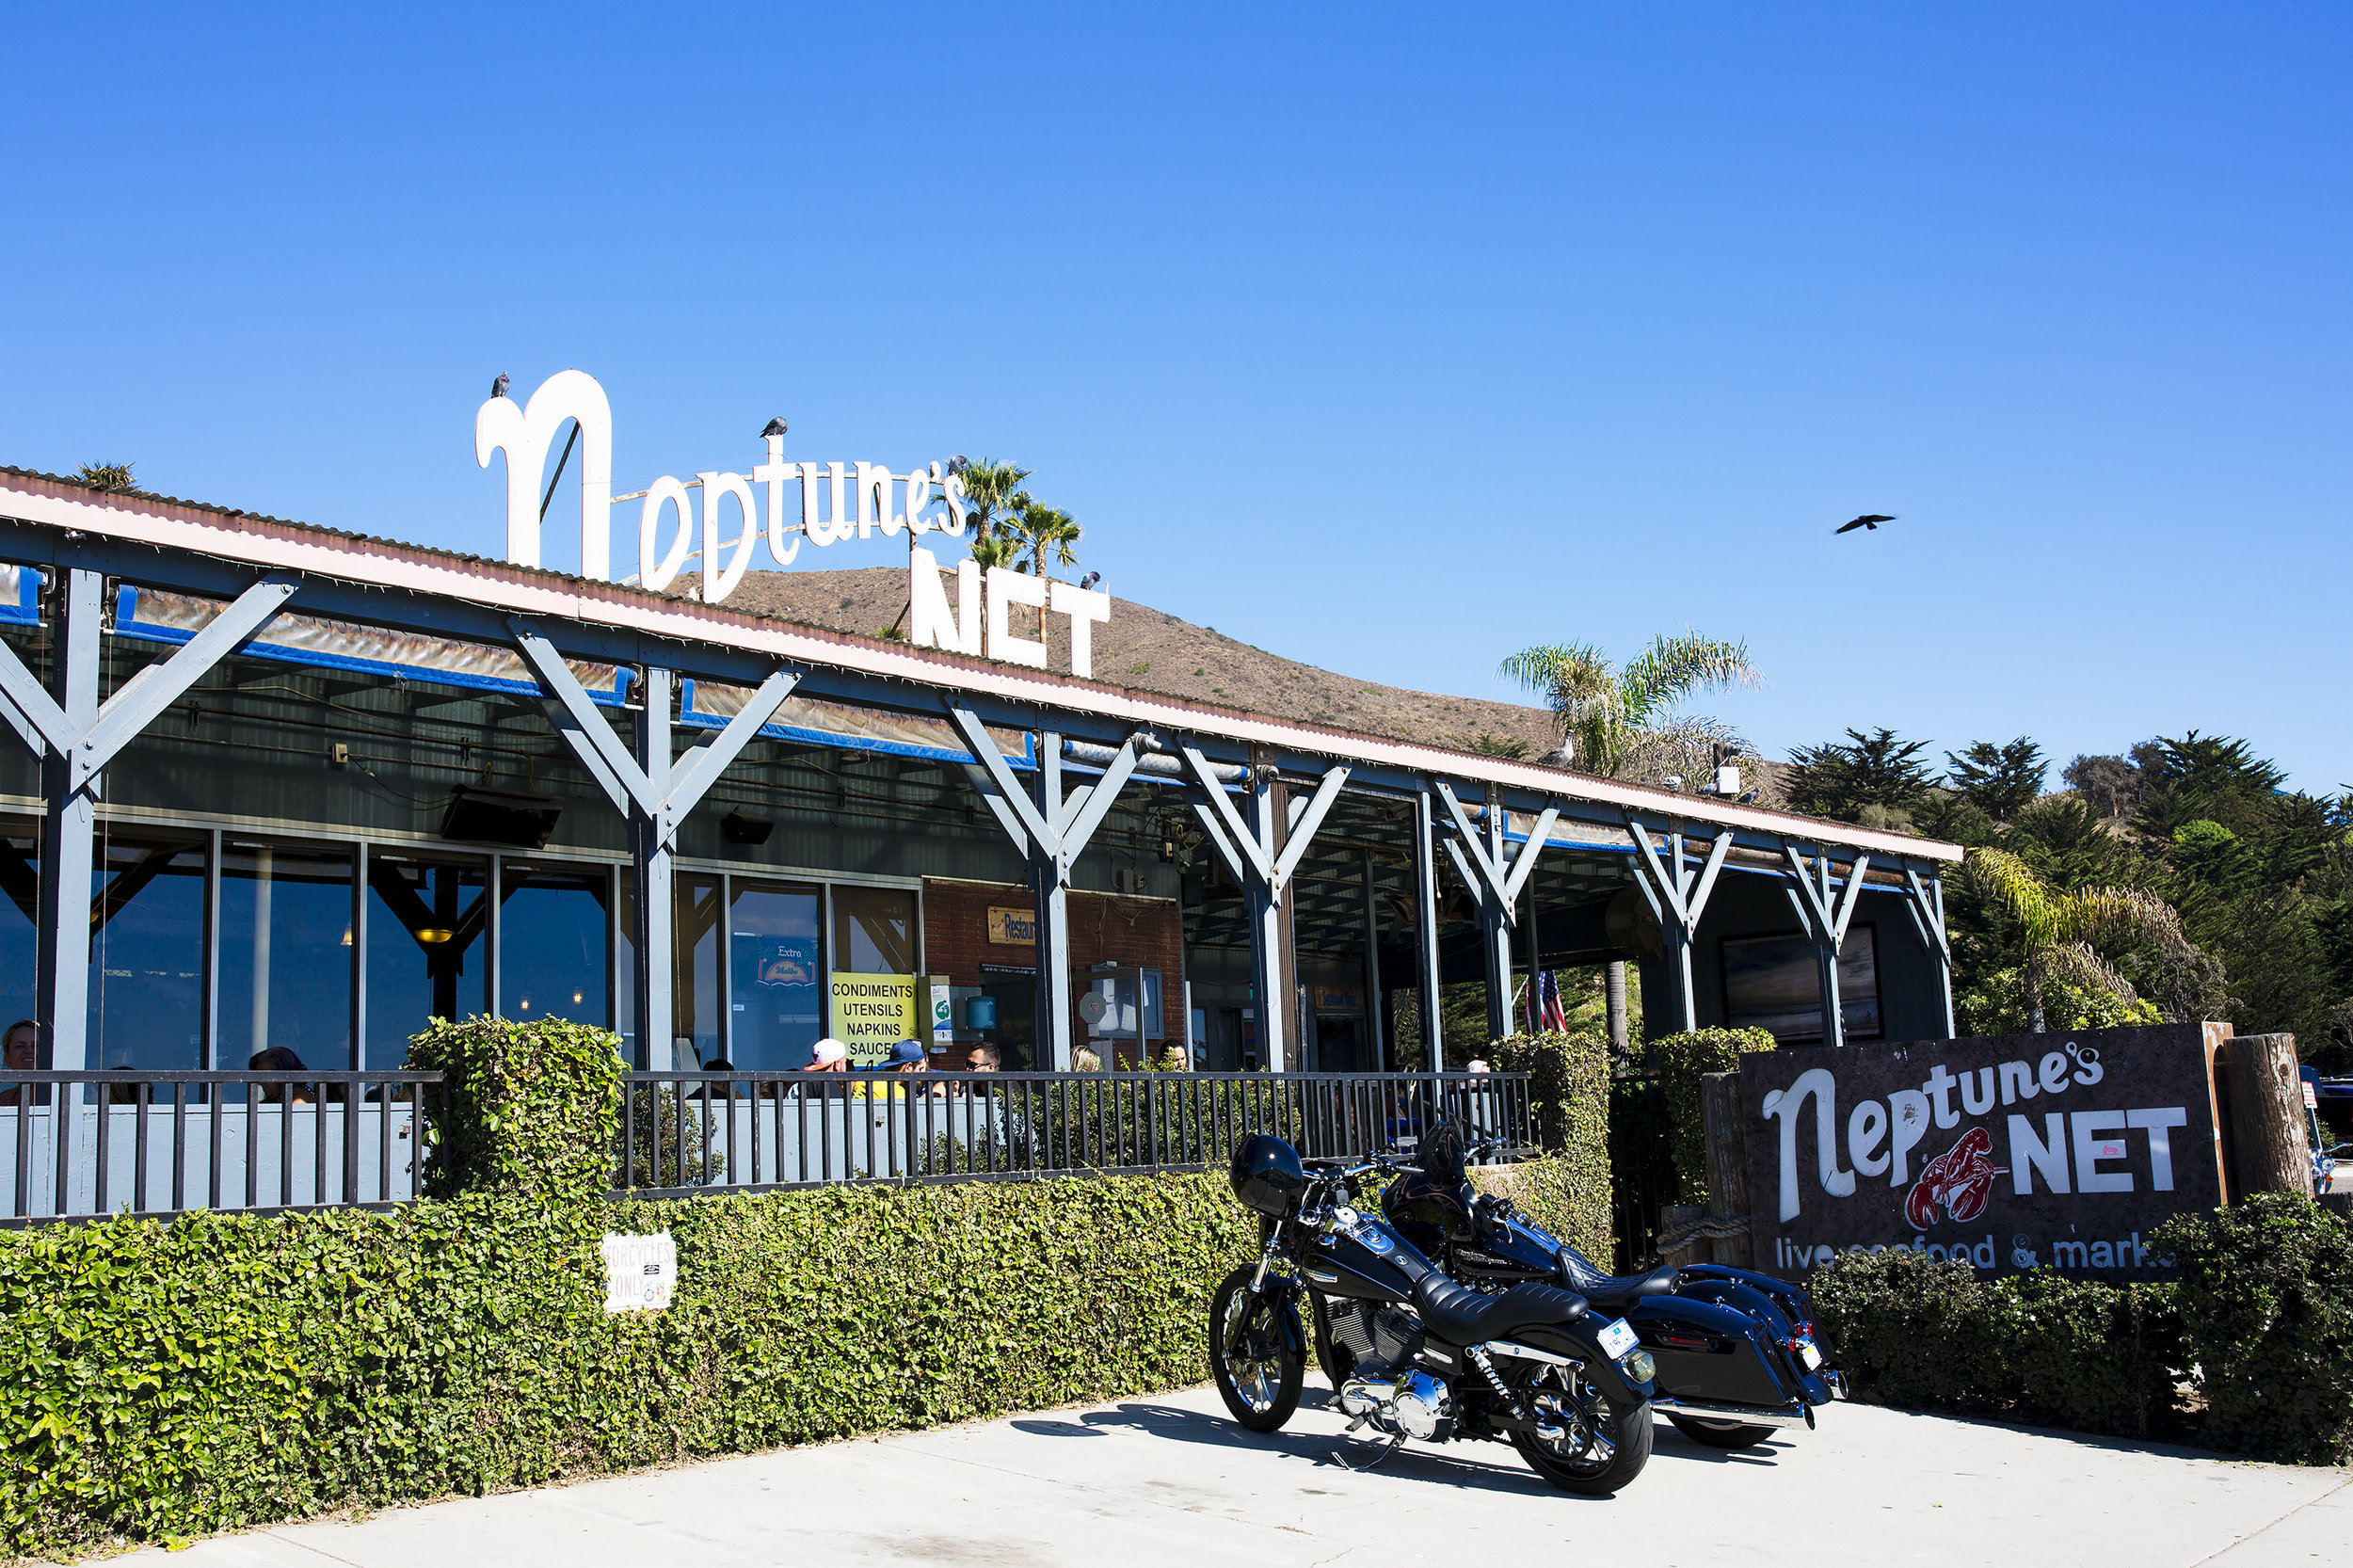 Eat Beachside at Neptunes Net, Malibu's landmark restaurant by the sea